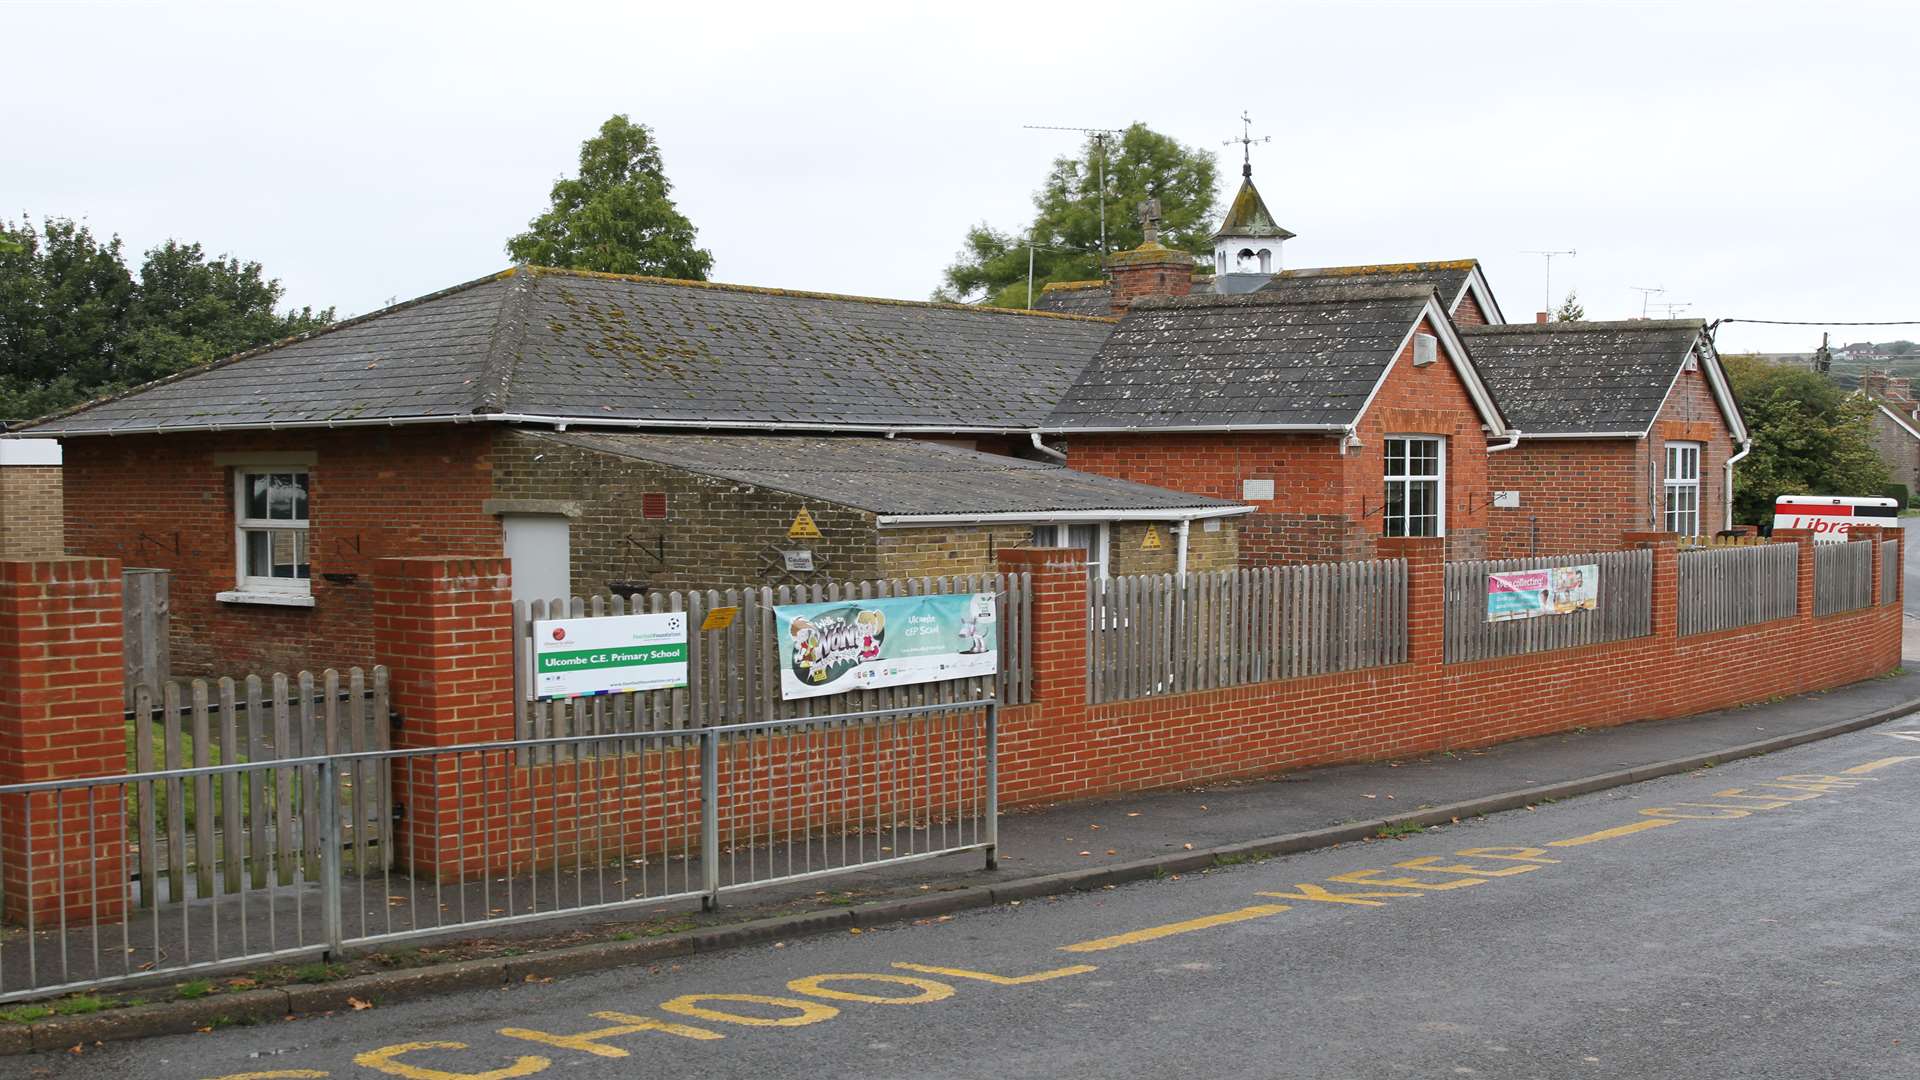 Ulcombe Primary School in Maidstone